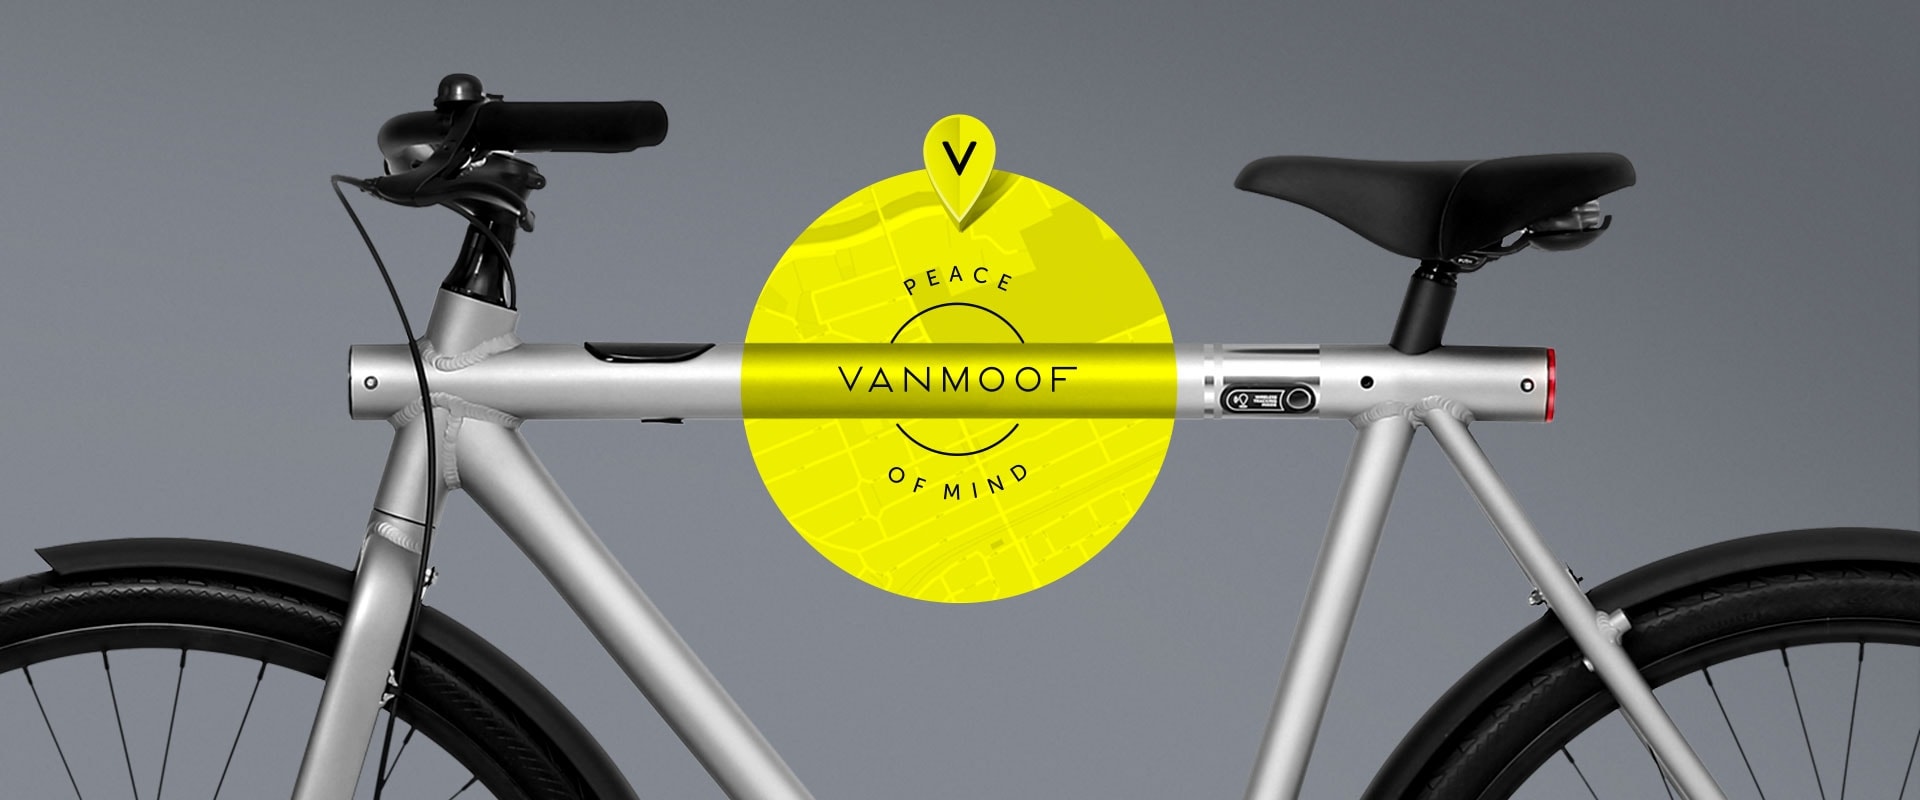 VanMoof SmartBike diebstahlsicheres Fahrrad